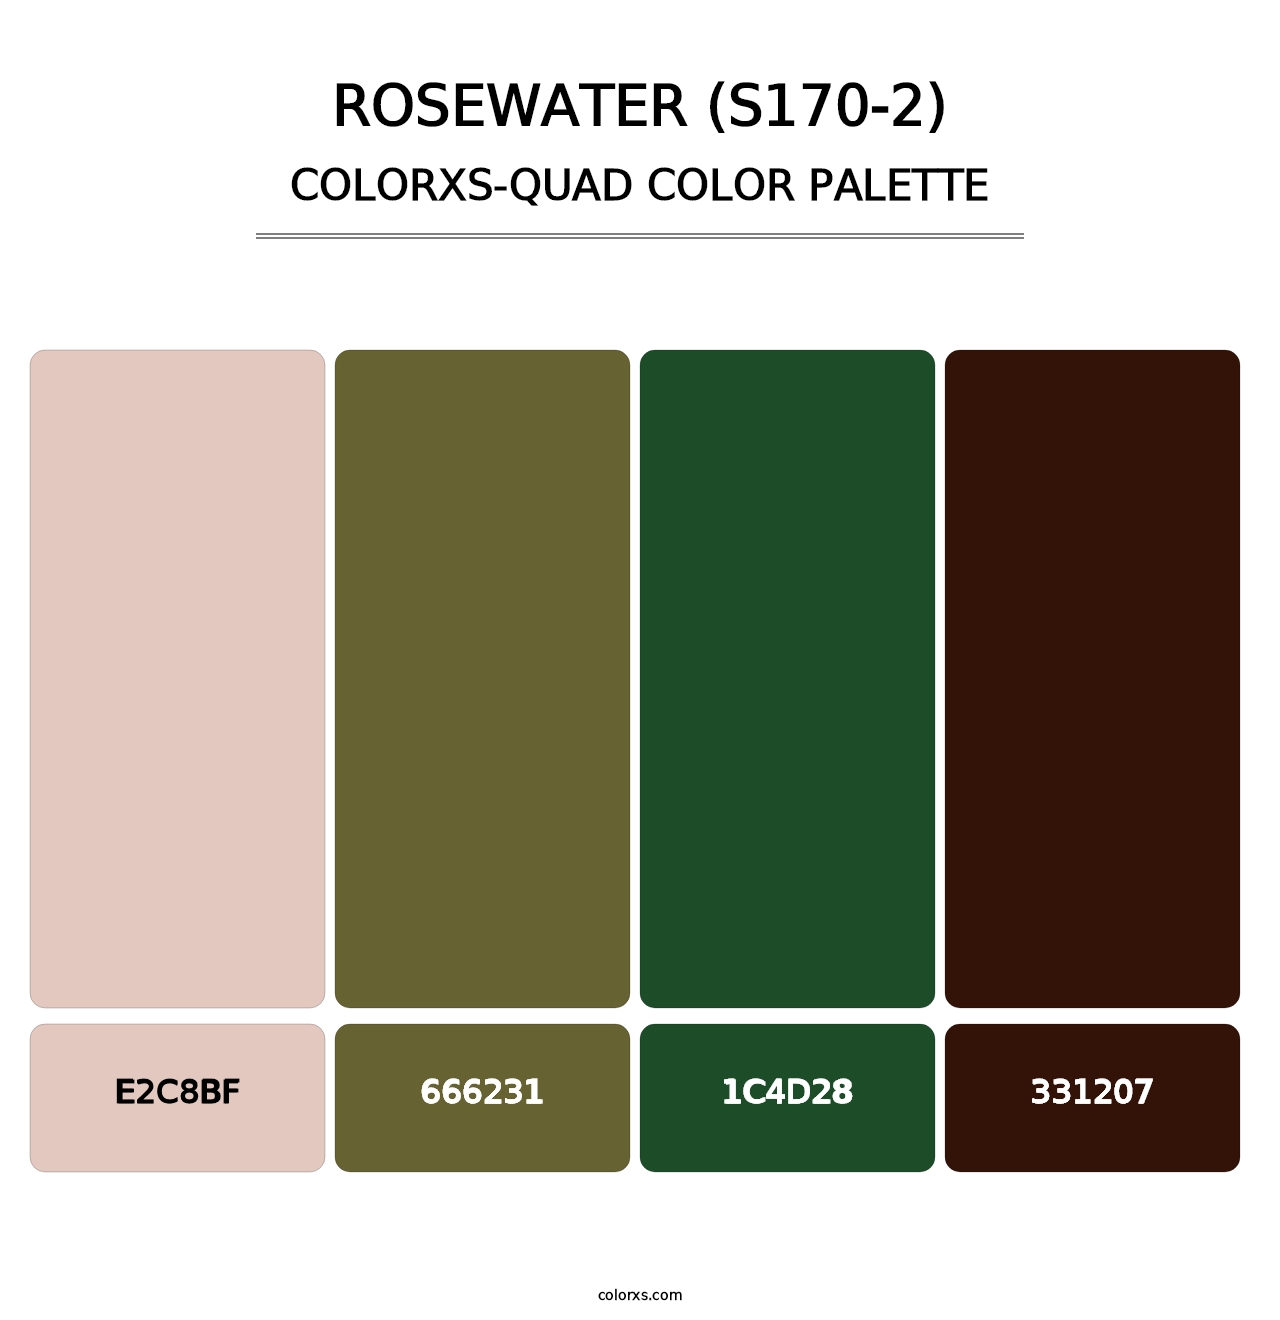 Rosewater (S170-2) - Colorxs Quad Palette